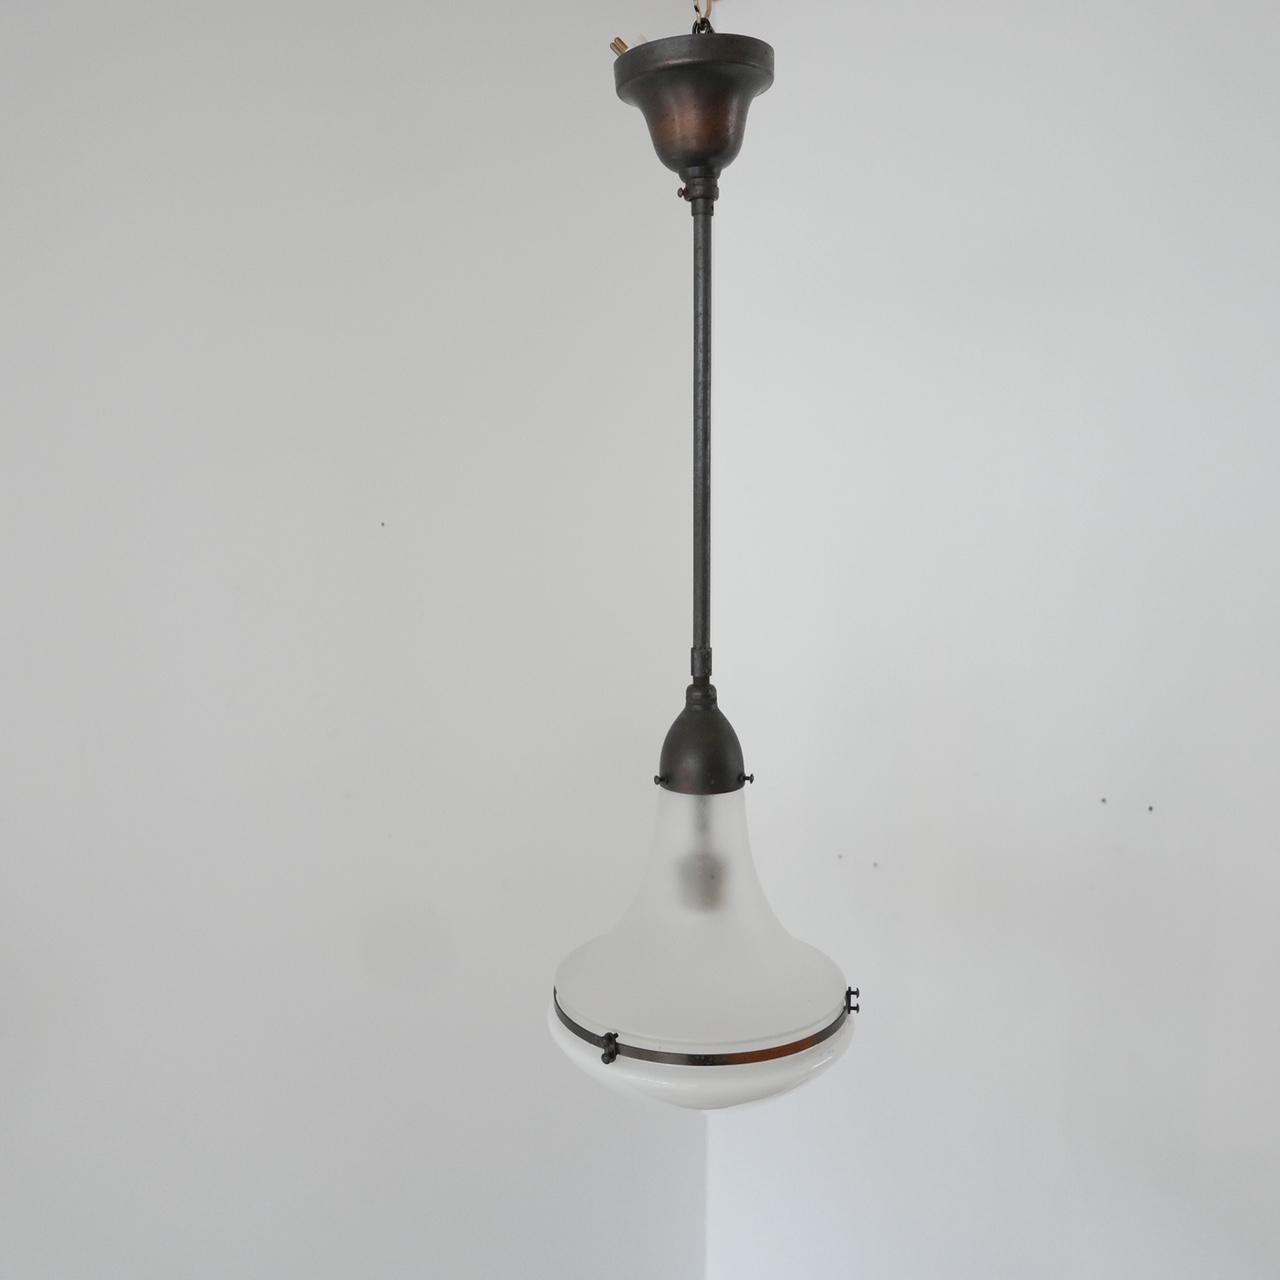 Peter Behrens Bauhaus Pendant Lamp 4